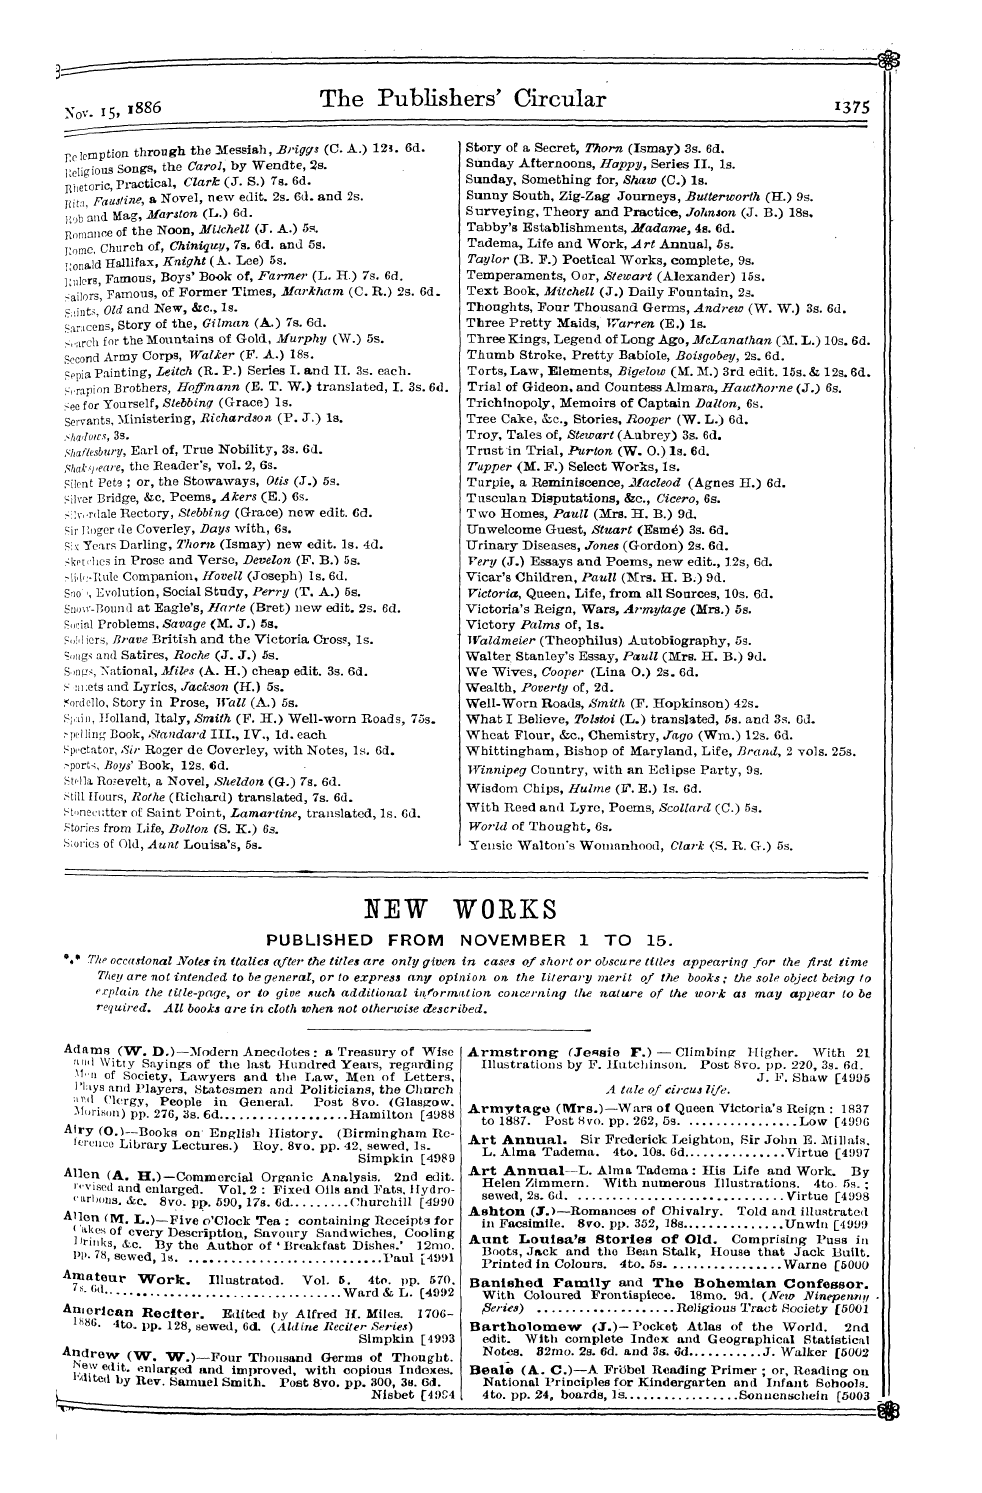 Publishers’ Circular (1880-1890): jS F Y, 1st edition: 17